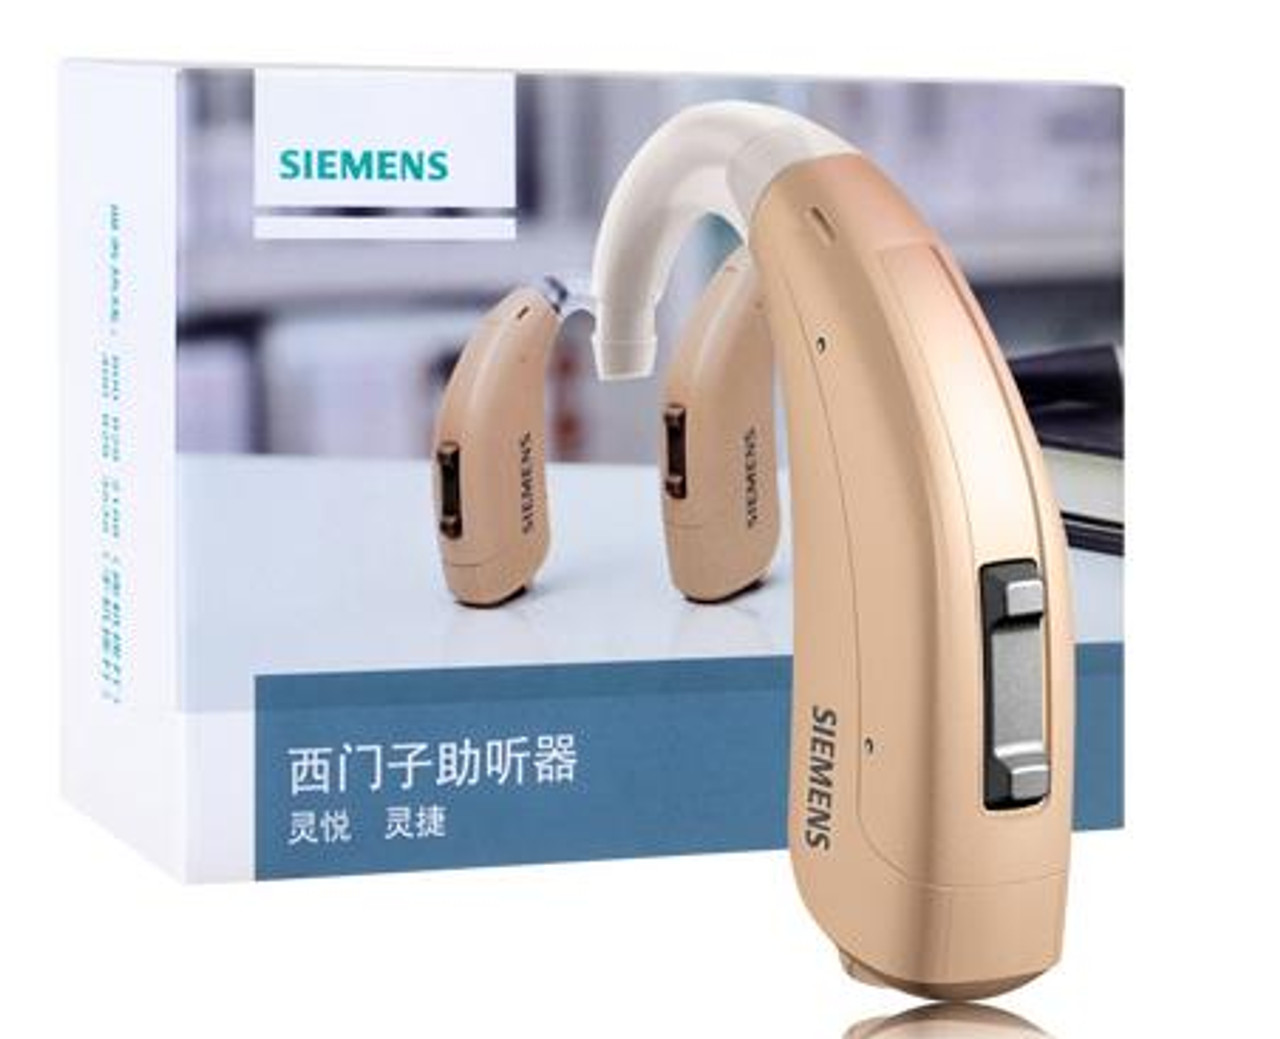 Siemens FAST P Digital Hearing Aid hear better